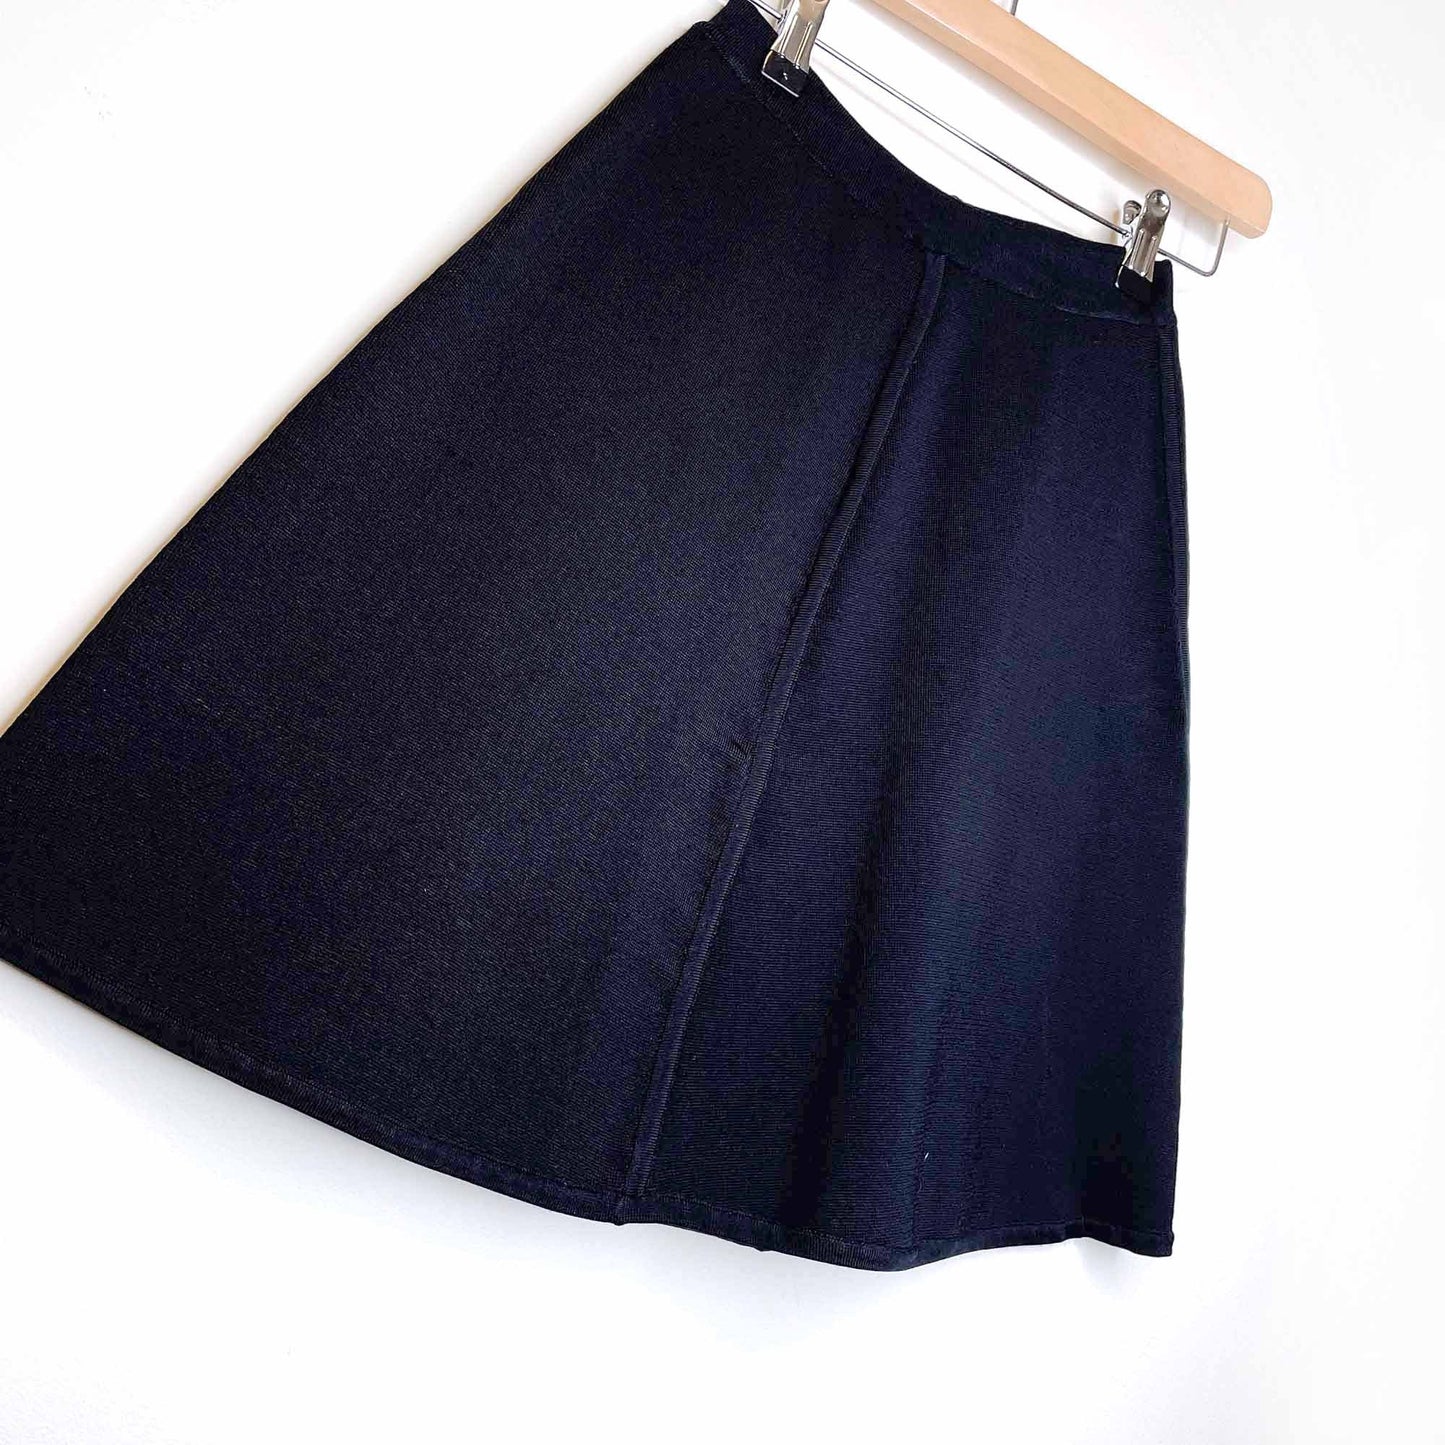 babaton black a line mini skirt - size xs